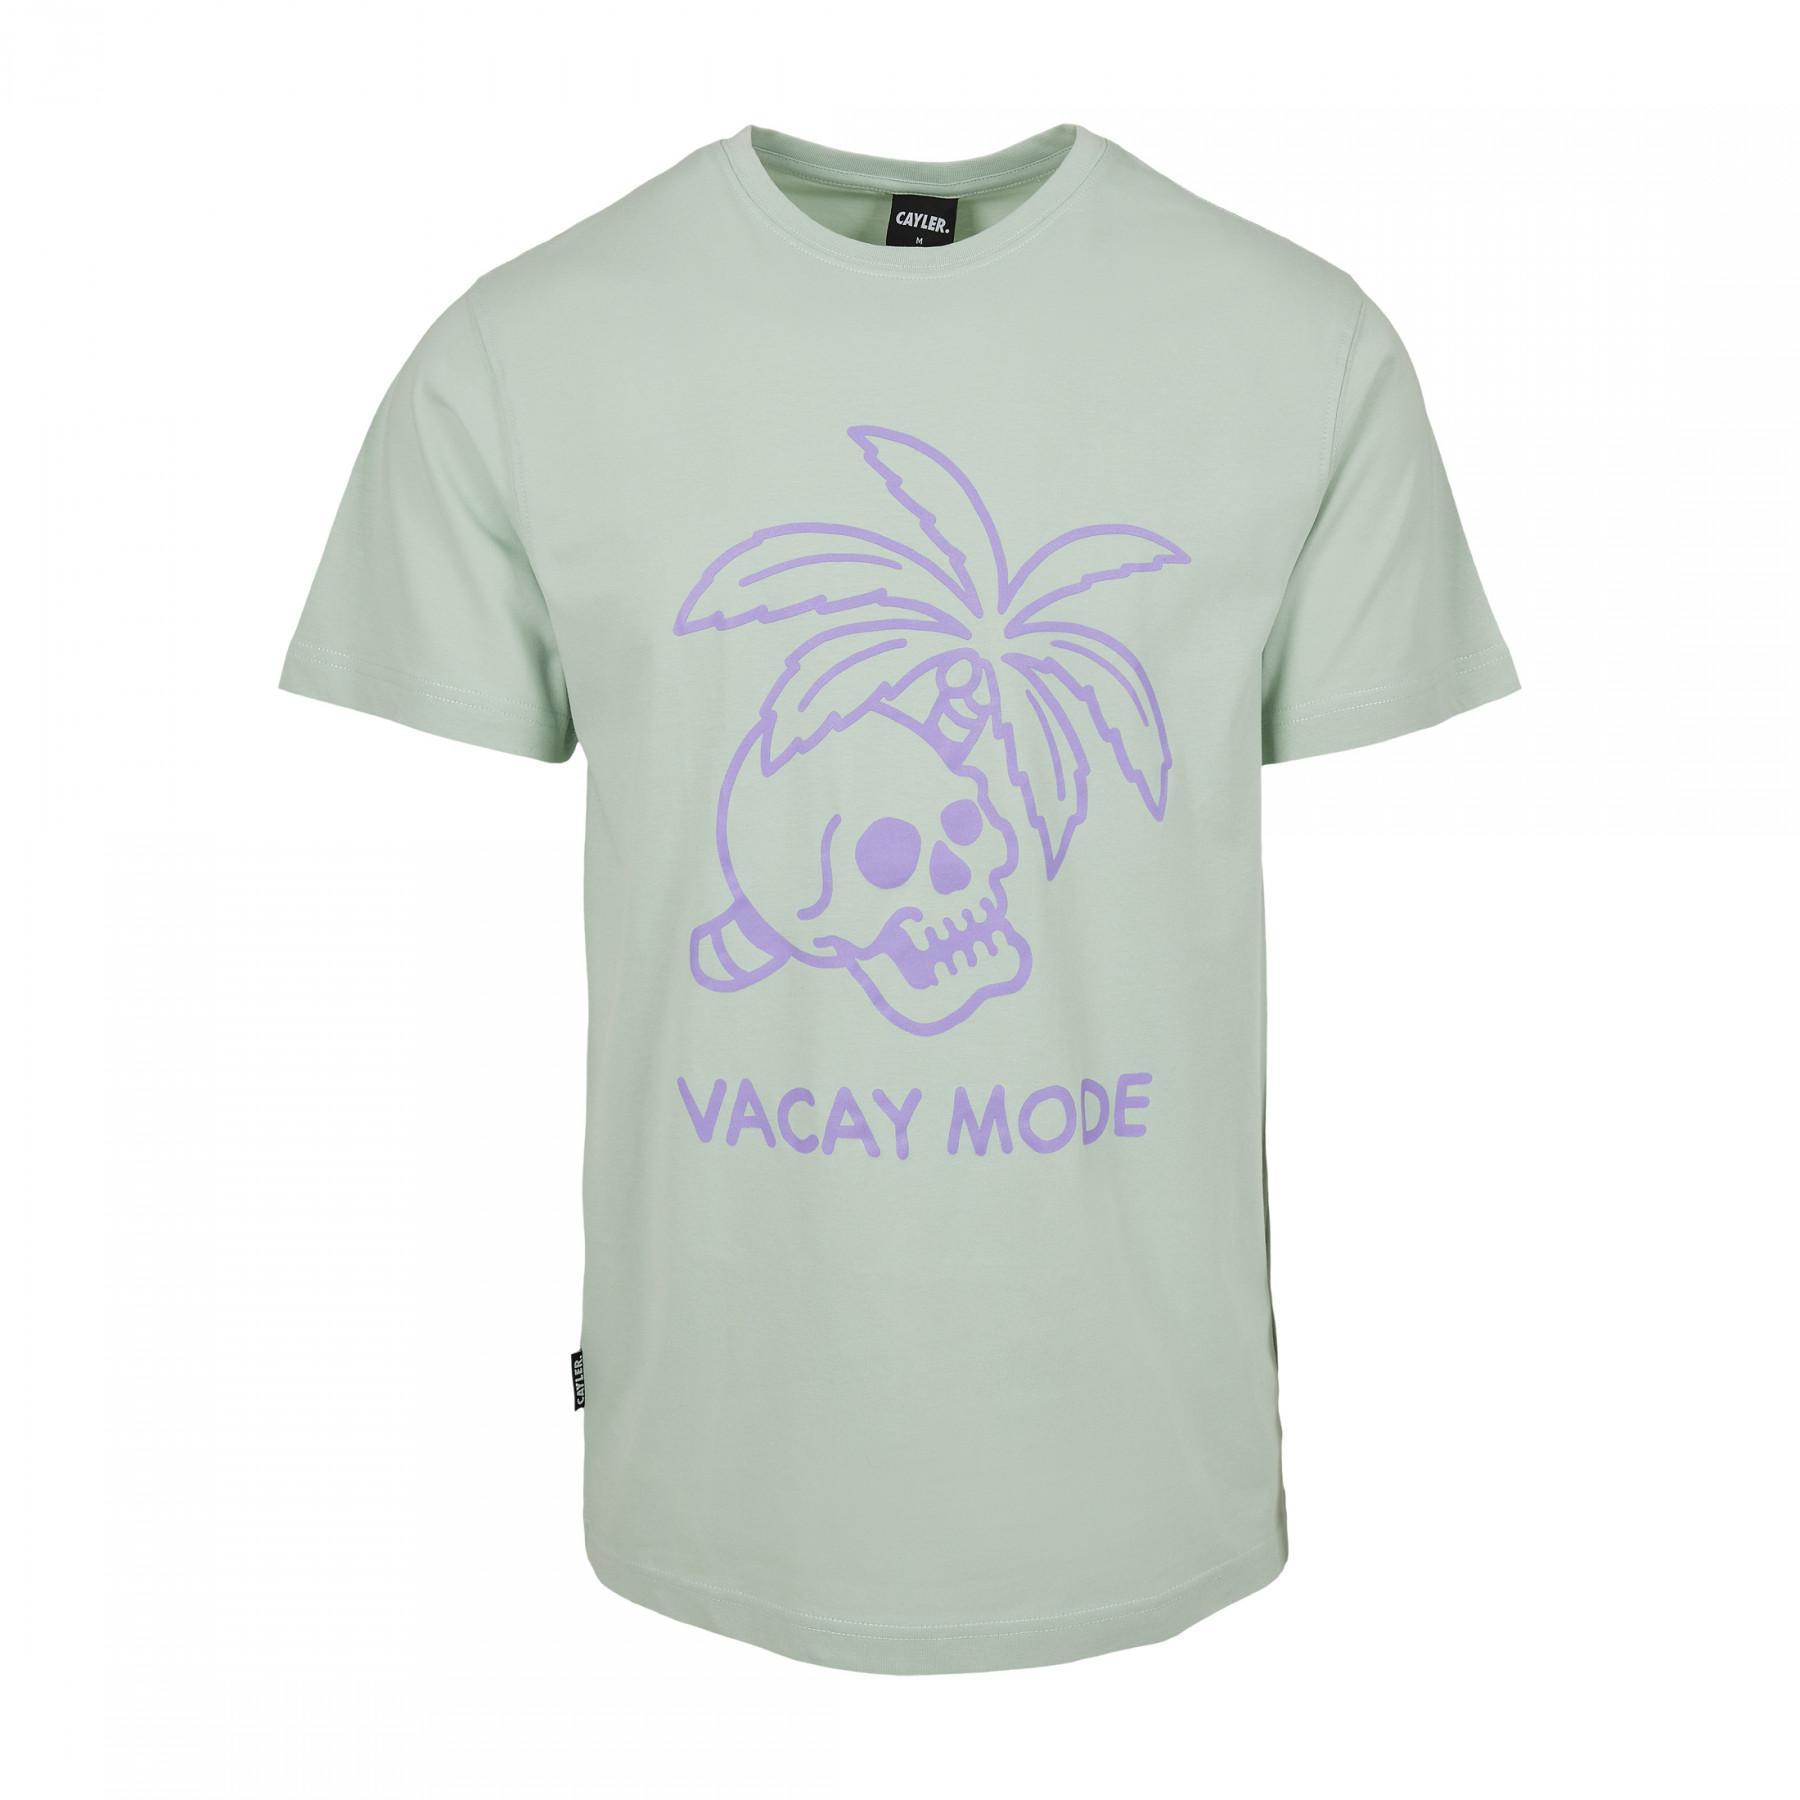 Camiseta Cayler & Sons vacay mode